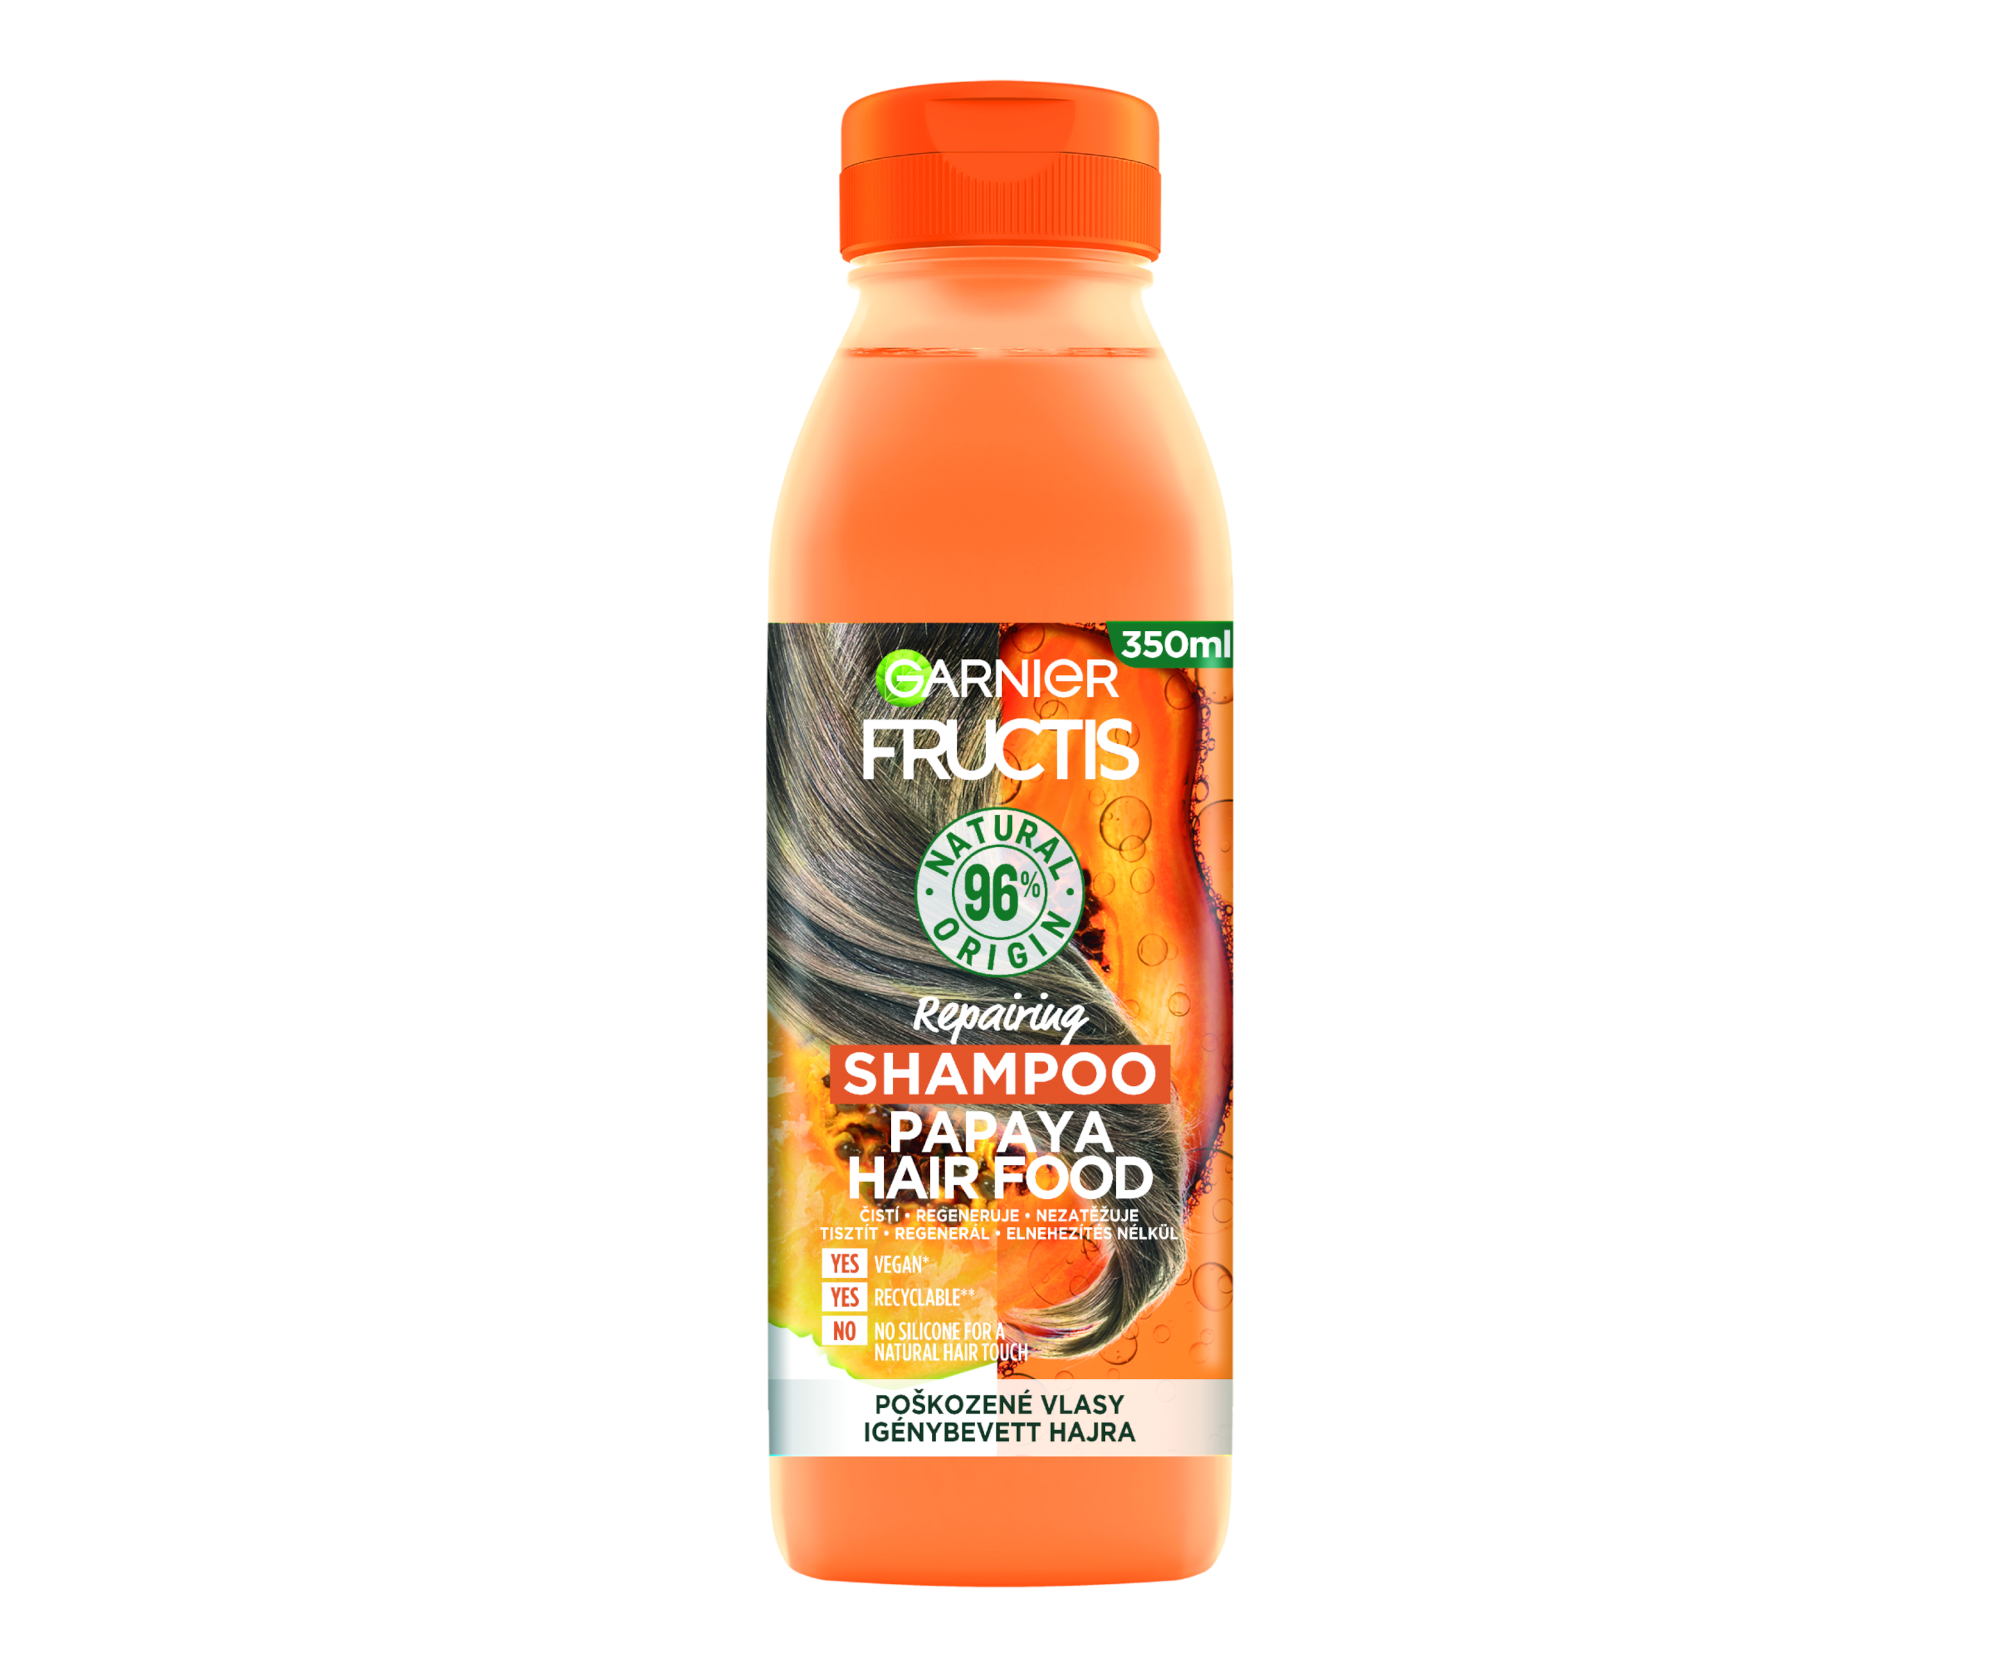 Regenerační šampon pro poškozené vlasy Garnier Fructis Papaya Hair Food - 350 ml + dárek zdarma